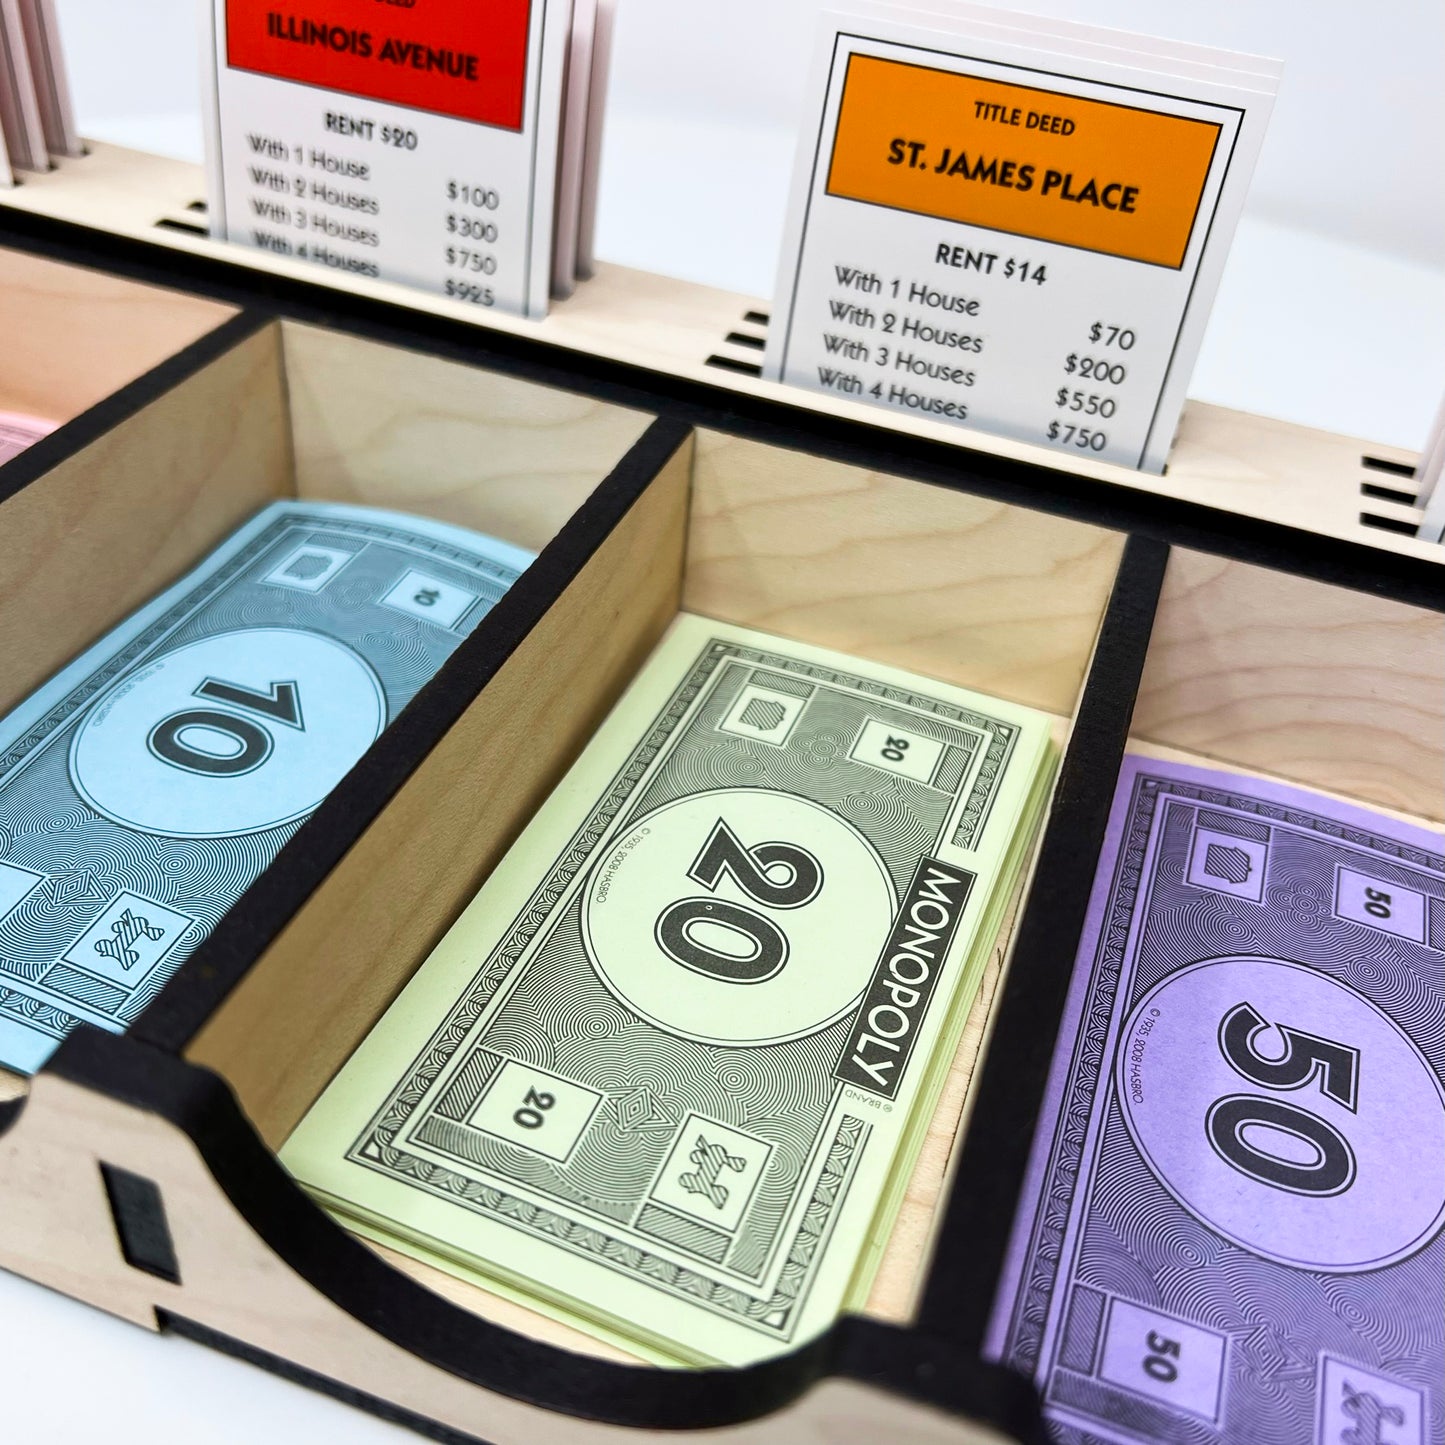 Monopoly Player Organizer